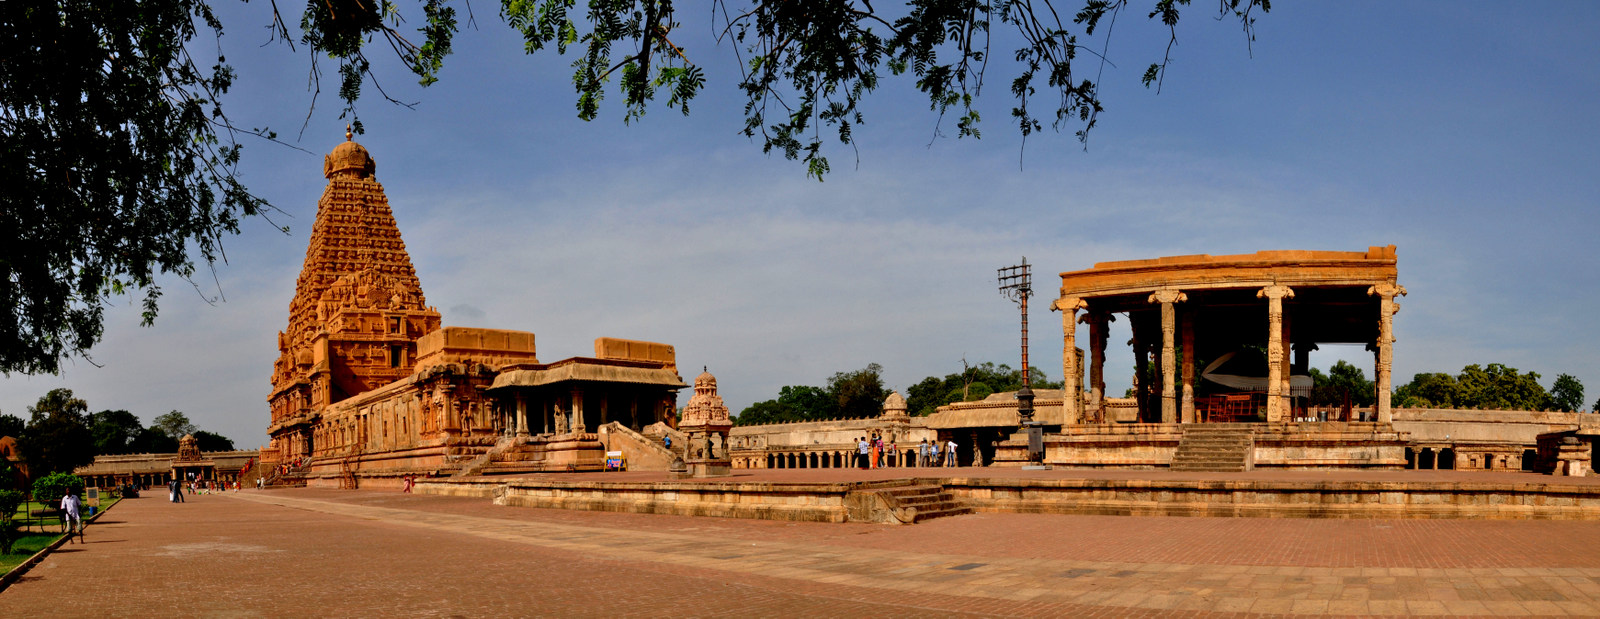 Thanjavur Temple.jpg